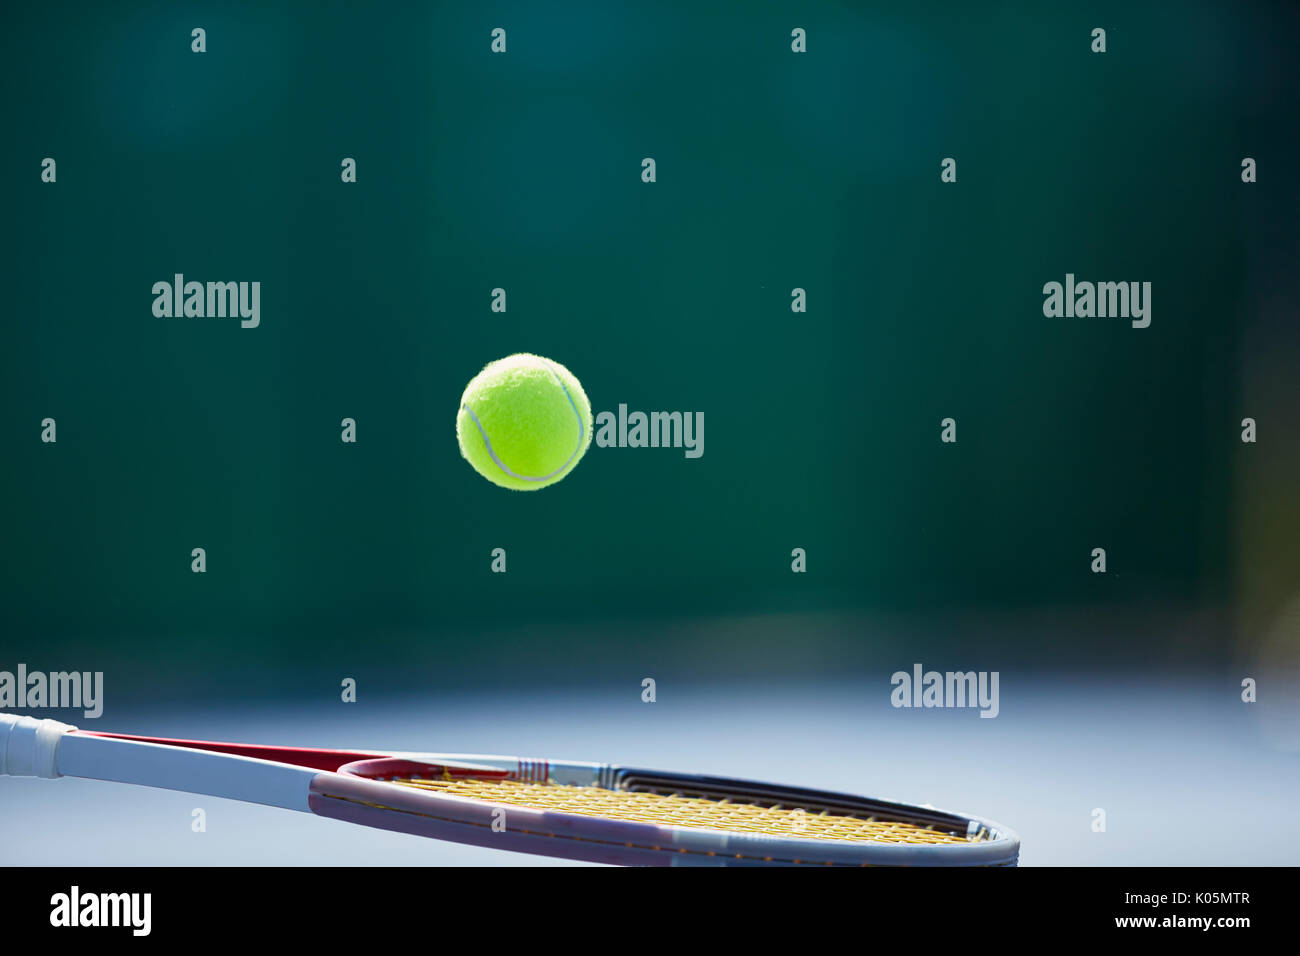 Tennis ball bouncing on tennis racket Stock Photo